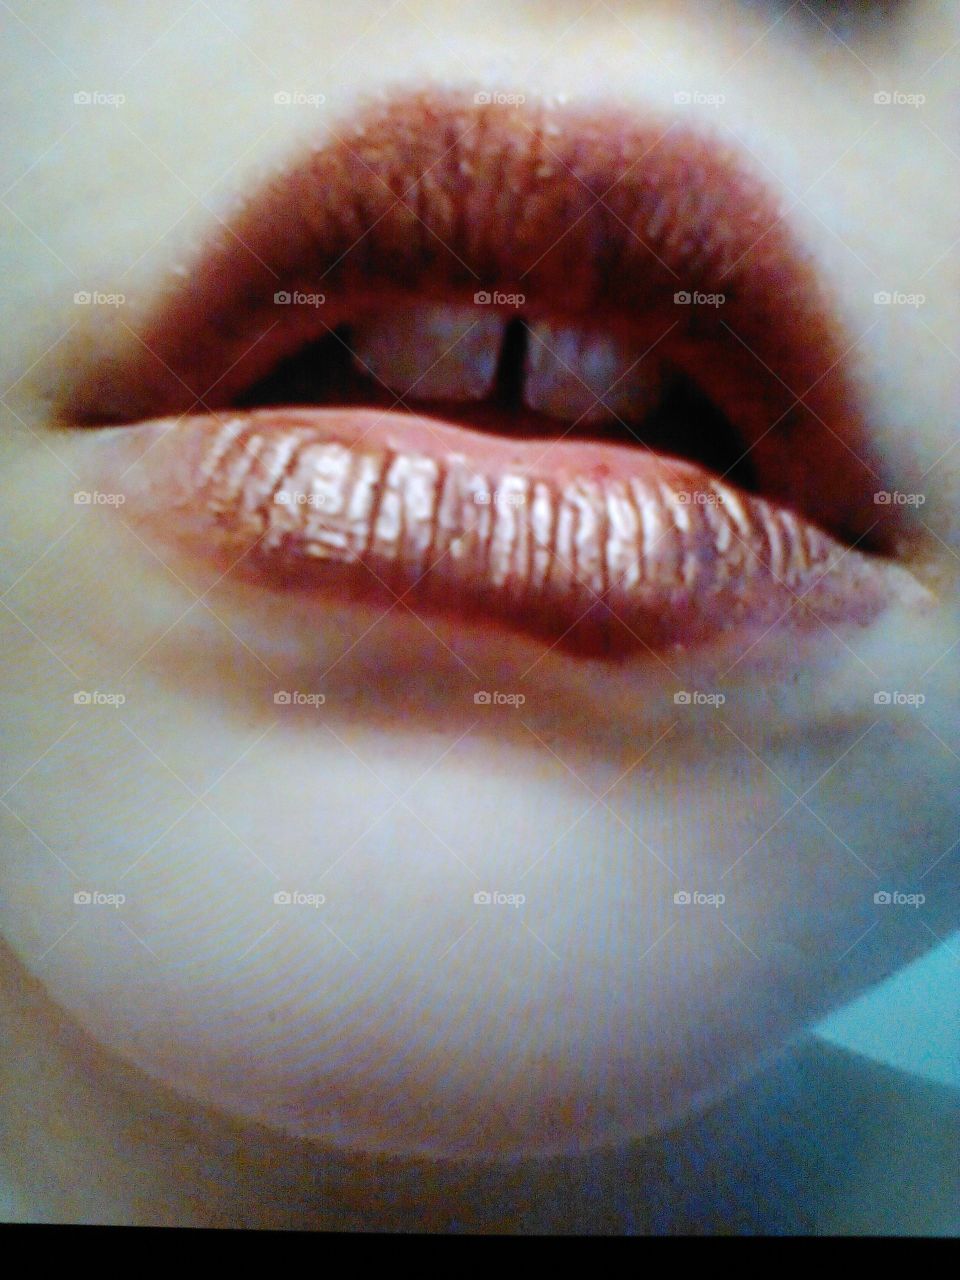 My new lip color